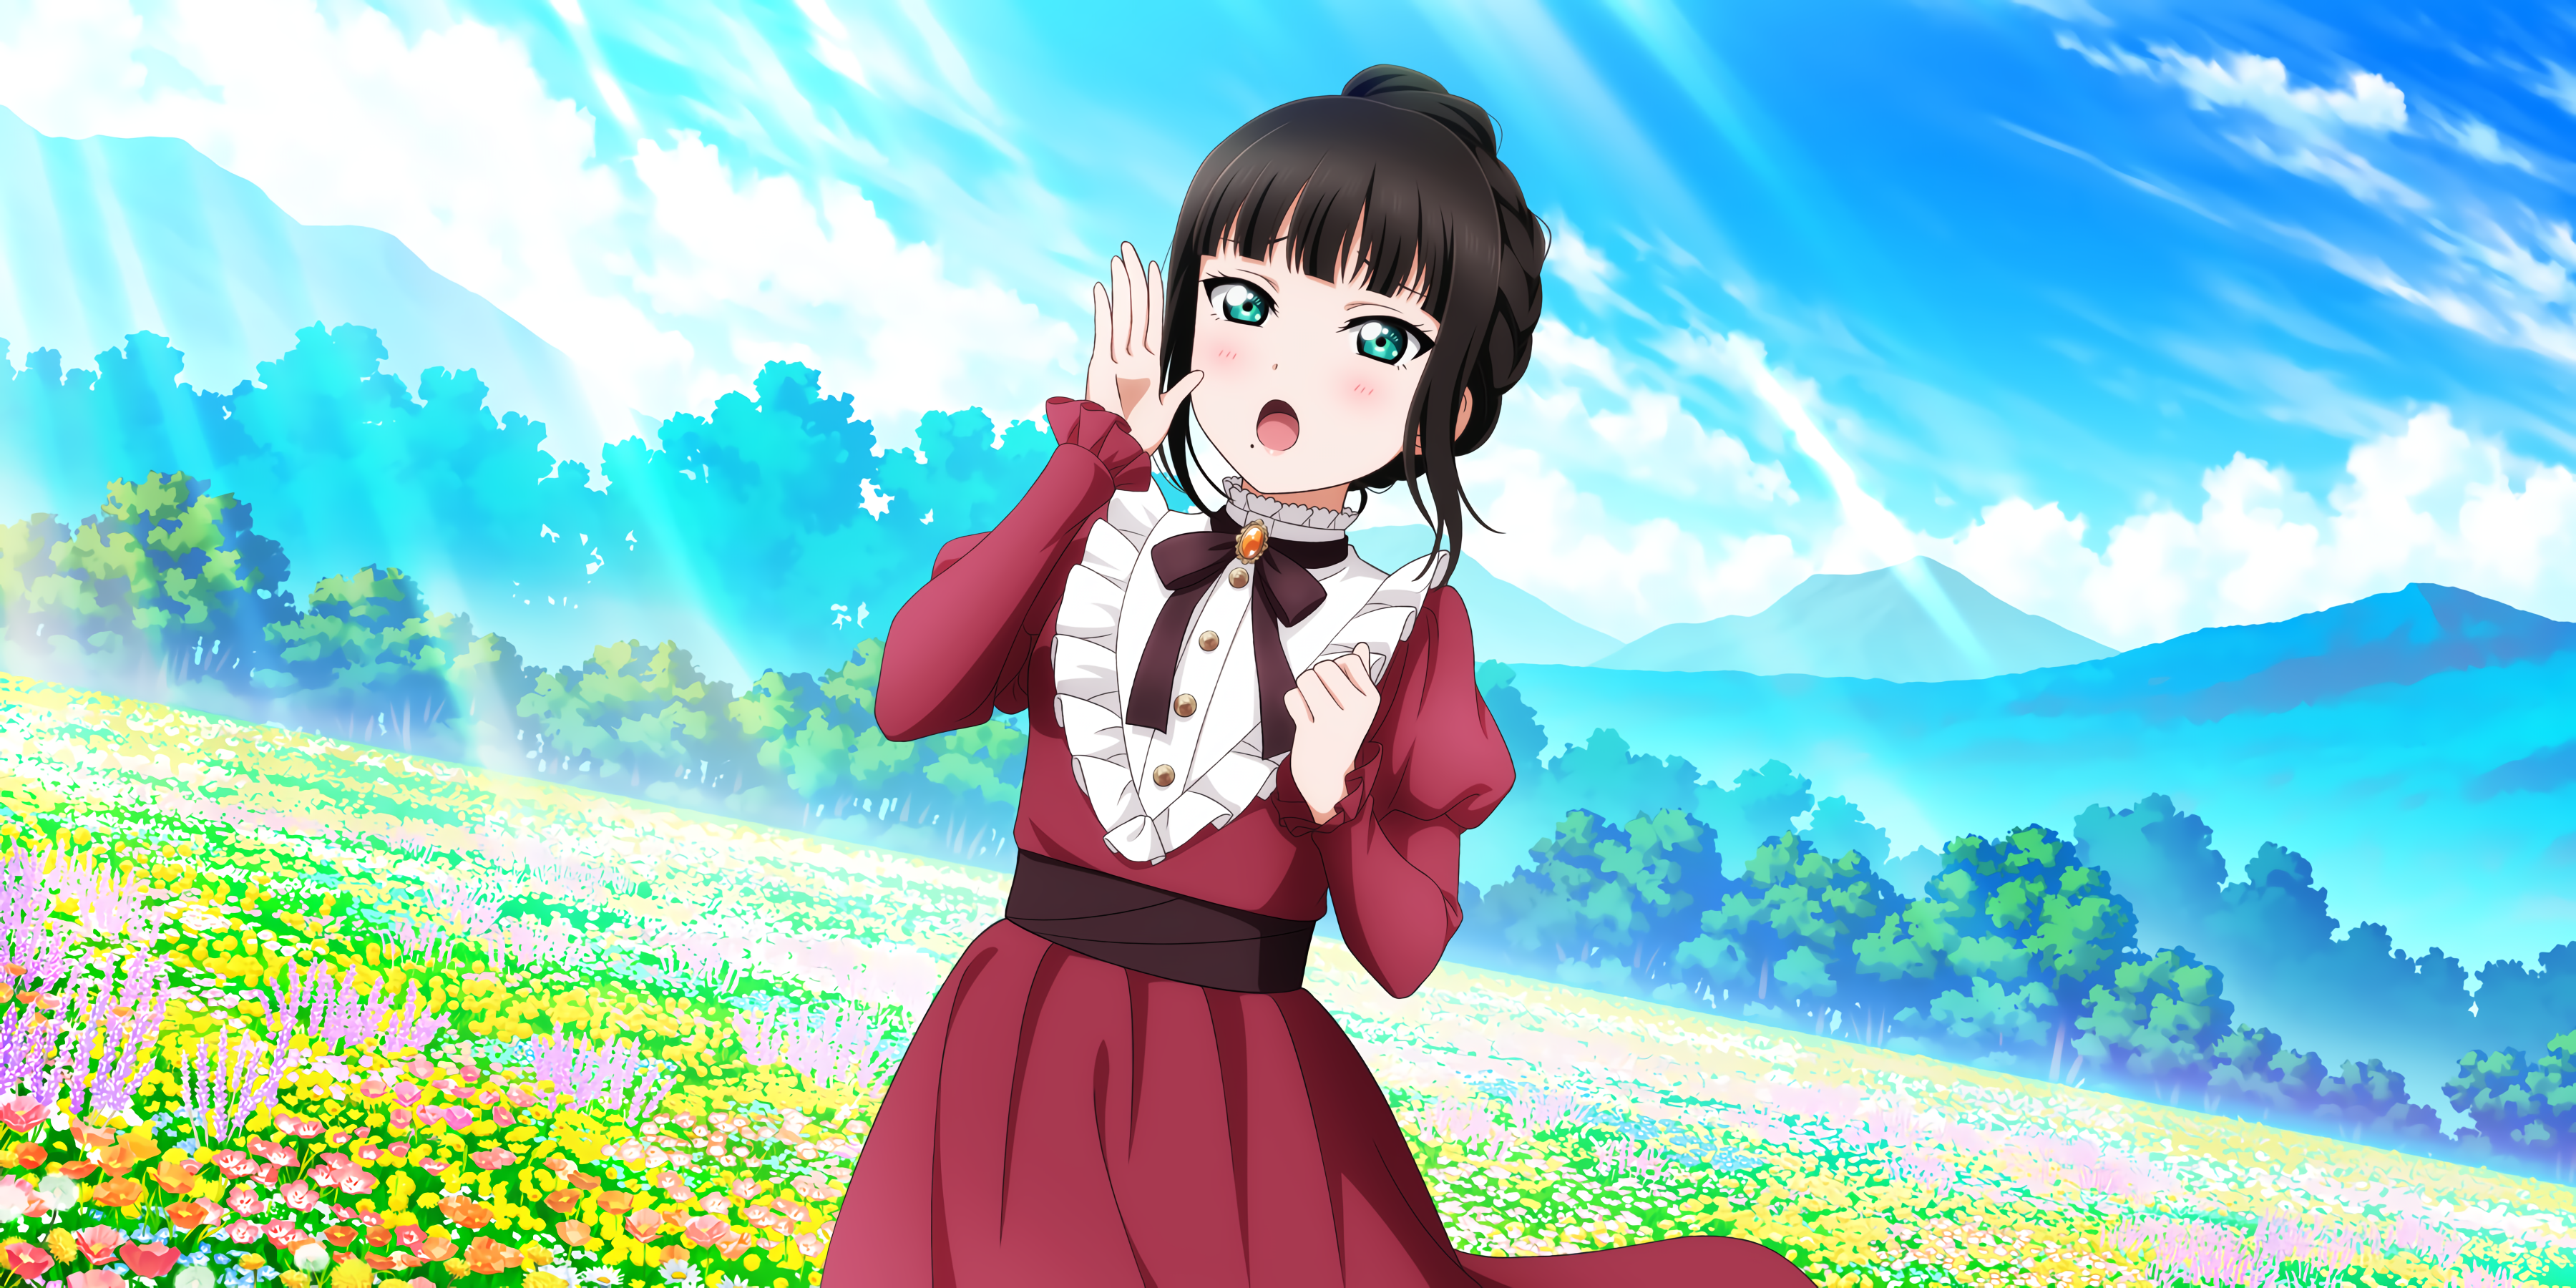 Anime 3600x1800 Kurosawa Dia Love Live! Sunshine Love Live! anime anime girls flowers sun rays trees mountains